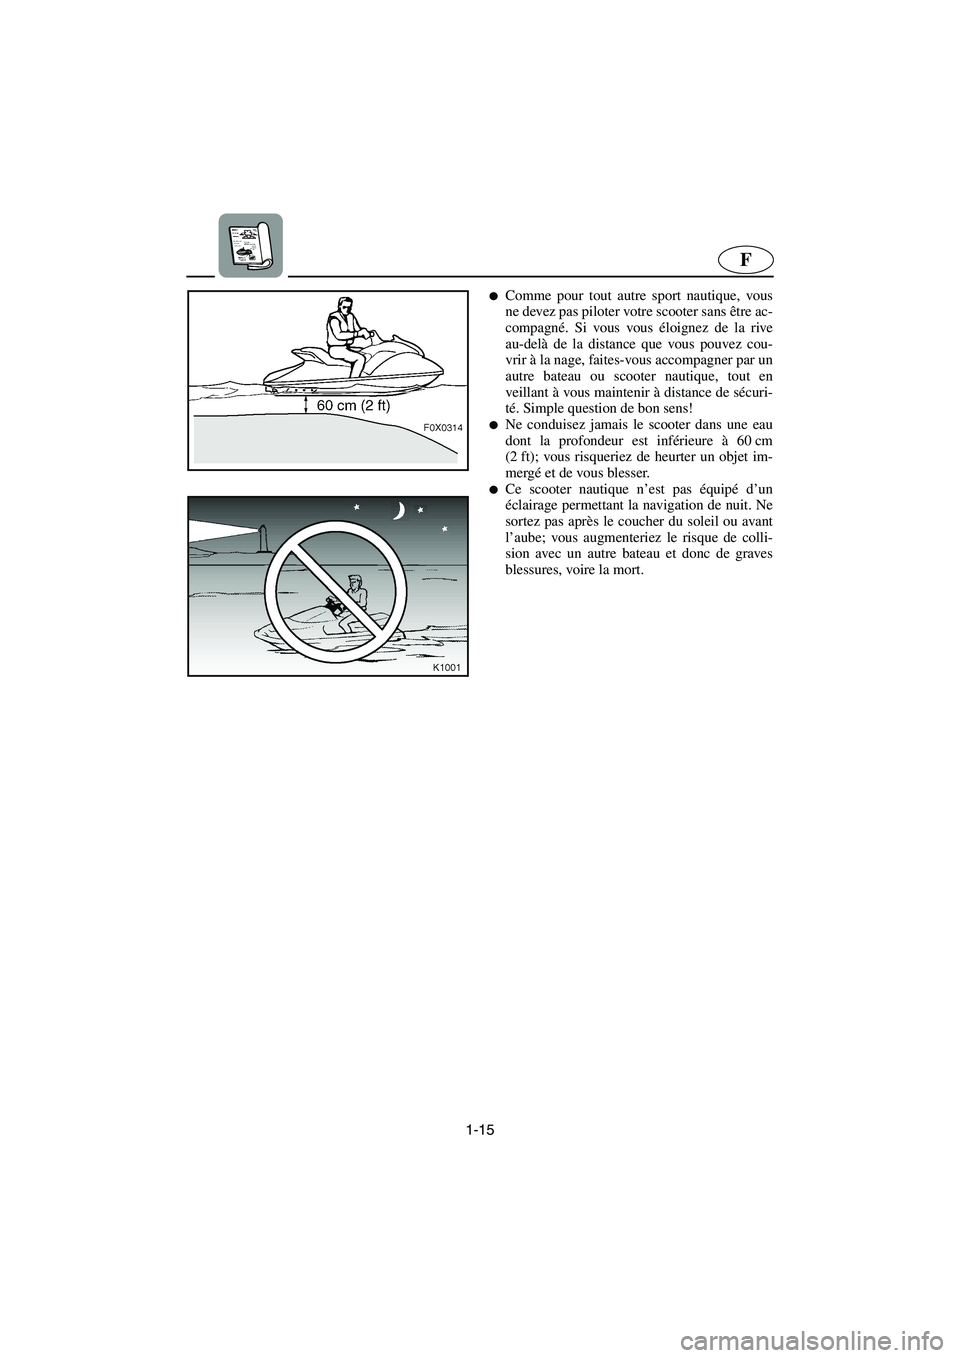 YAMAHA GP1200 2002  Manuale de Empleo (in Spanish) 1-15
F
Comme pour tout autre sport nautique, vous
ne devez pas piloter votre scooter sans être ac-
compagné. Si vous vous éloignez de la rive
au-delà de la distance que vous pouvez cou-
vrir à l